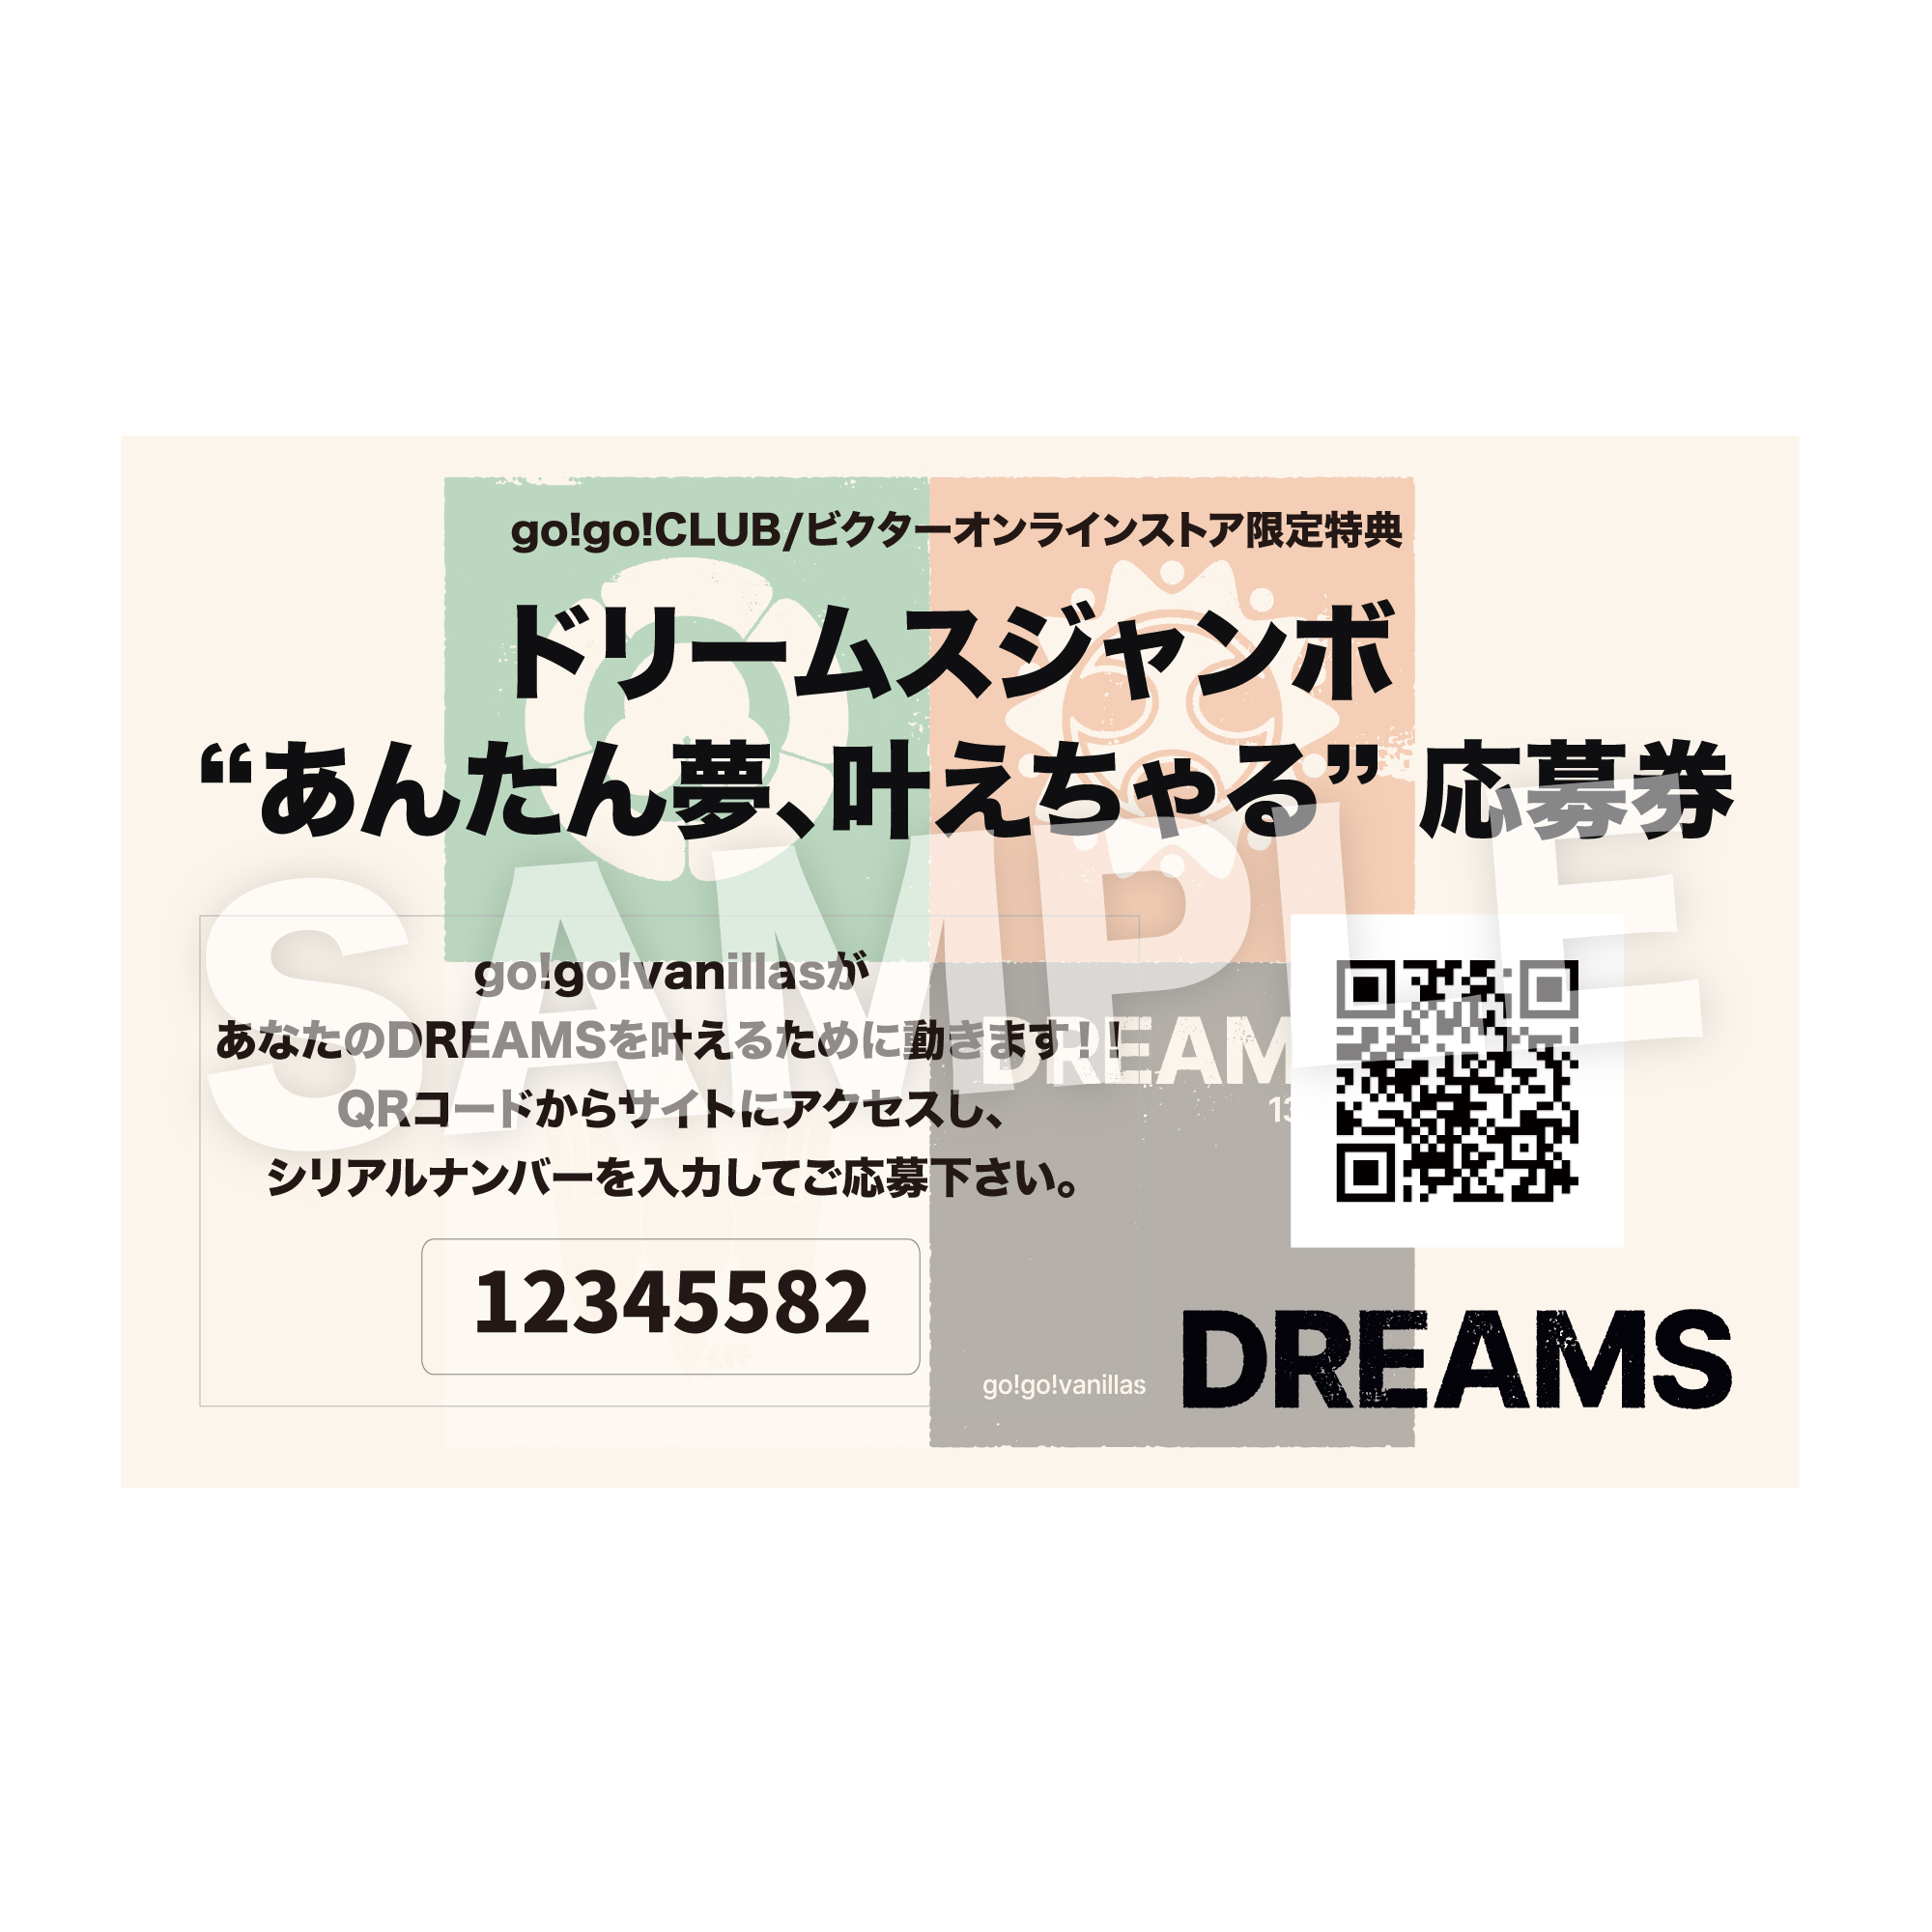 数量限定生産盤 「DREAMS」(LIMITED ”ggv” PACKAGE)(2CD+BD)